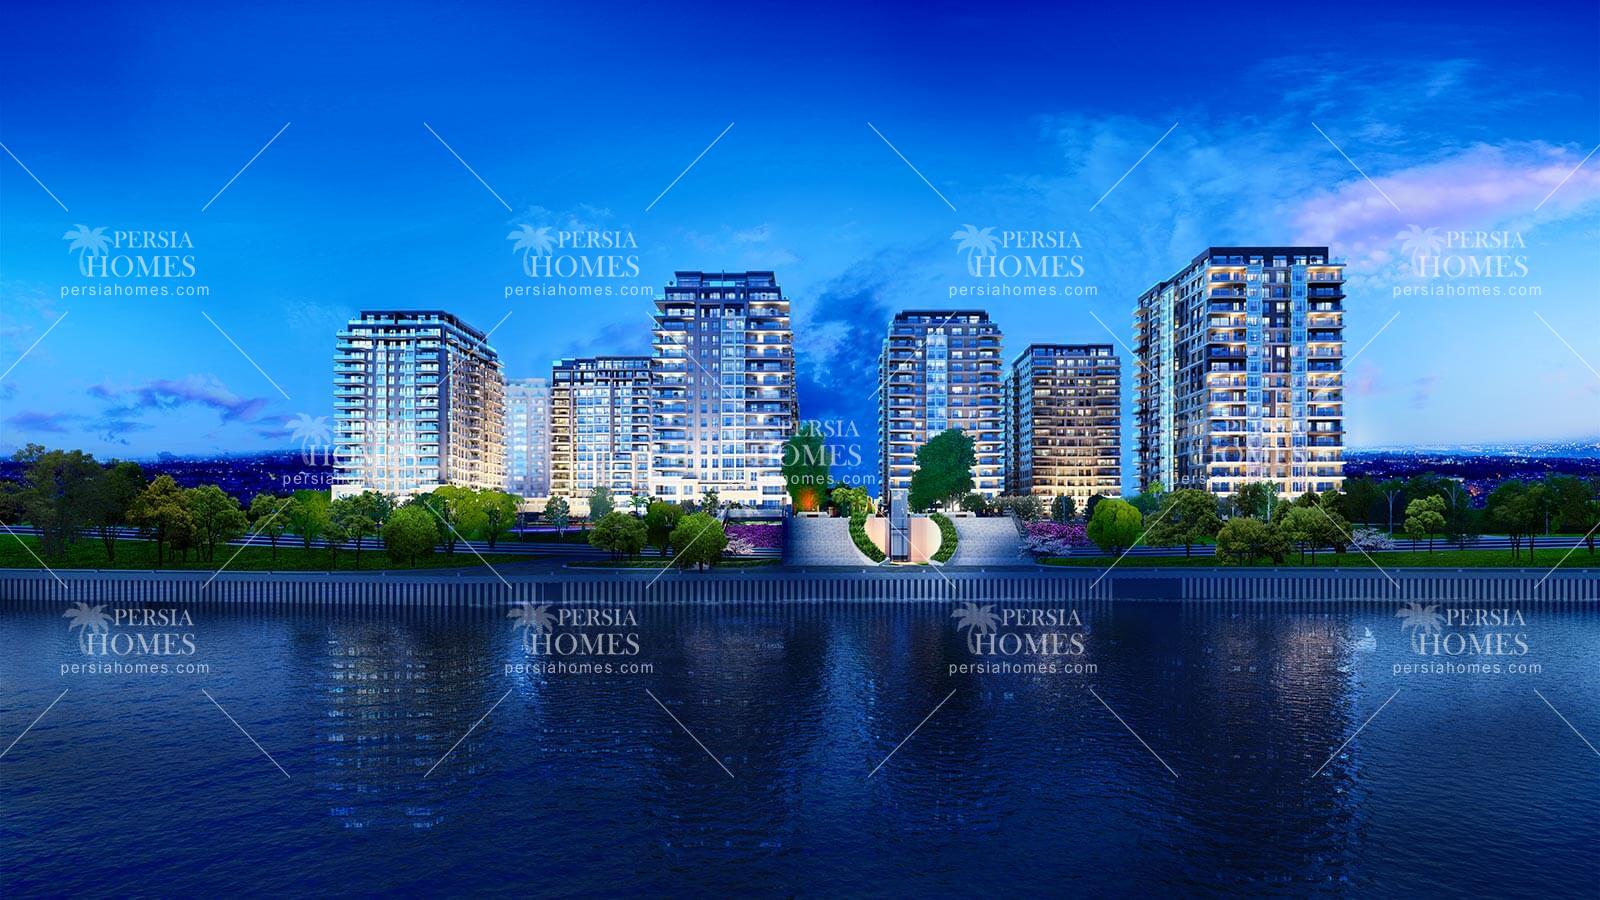 فروش ویژه آپارتمان با منظره دریا در زیتون بورنو استانبول